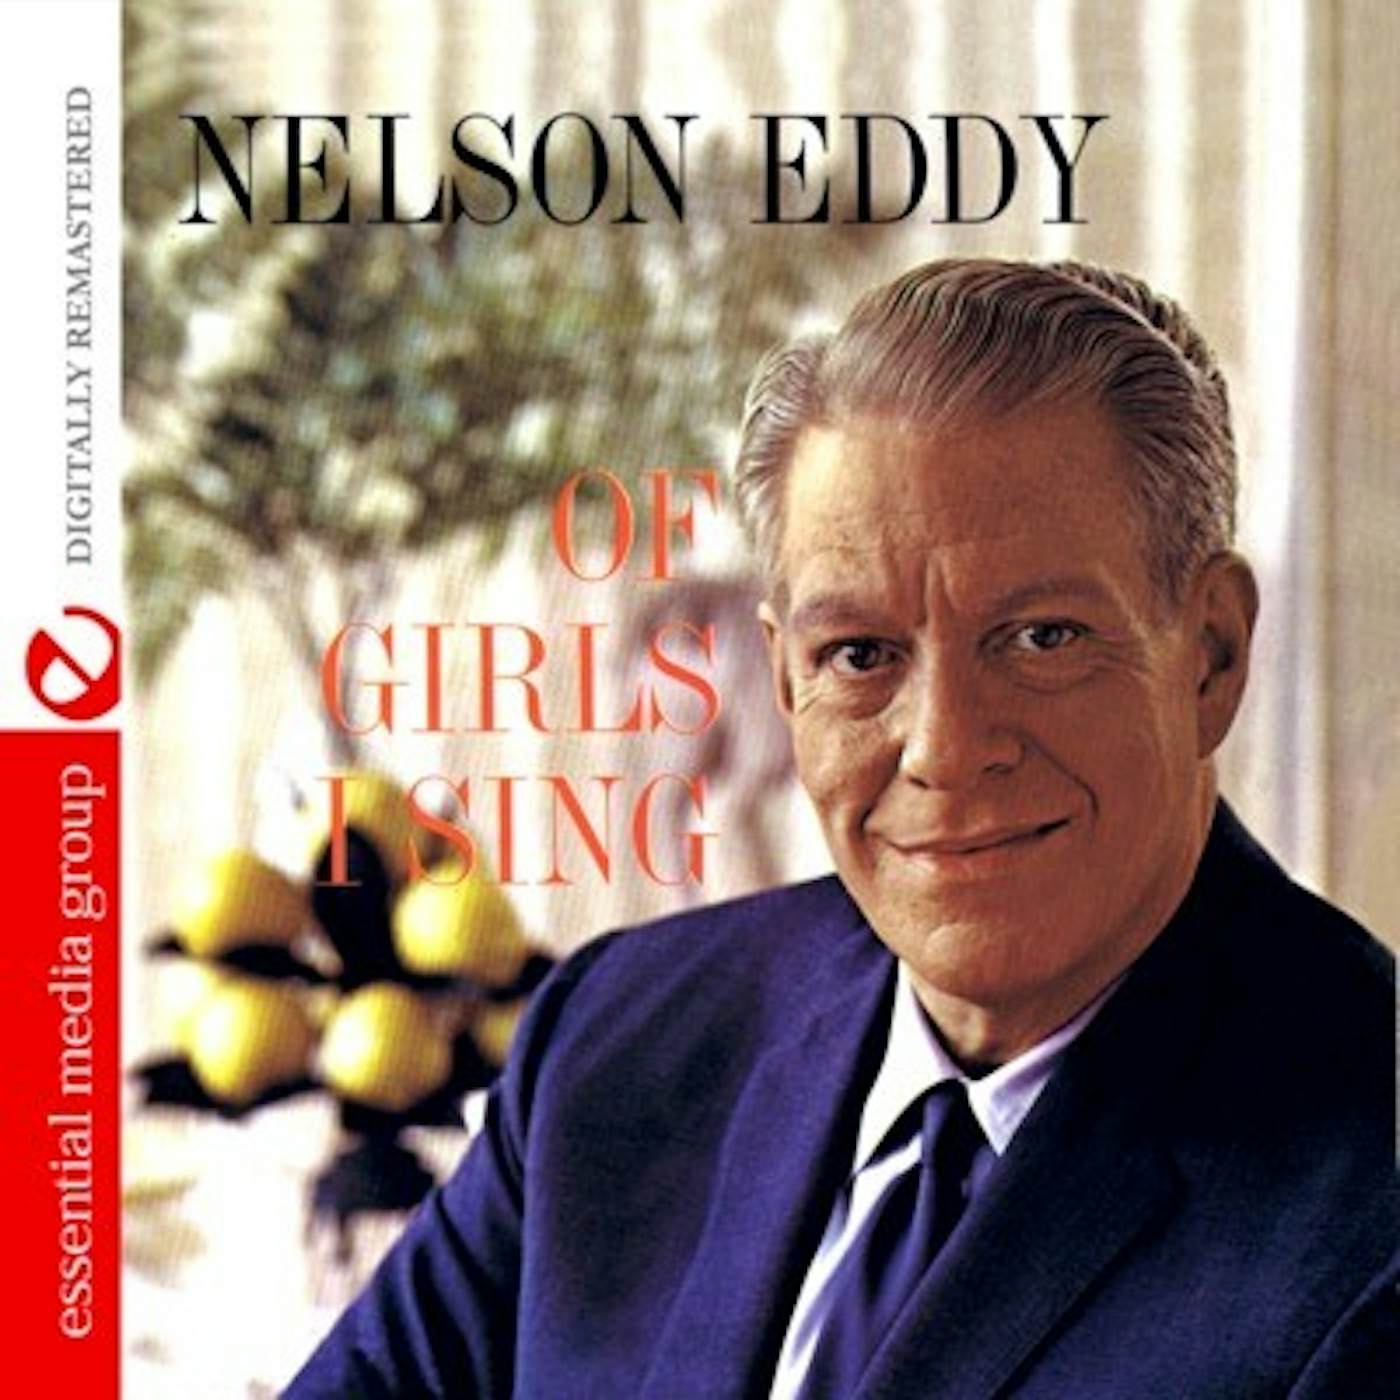 Nelson Eddy OF GIRLS I SING CD